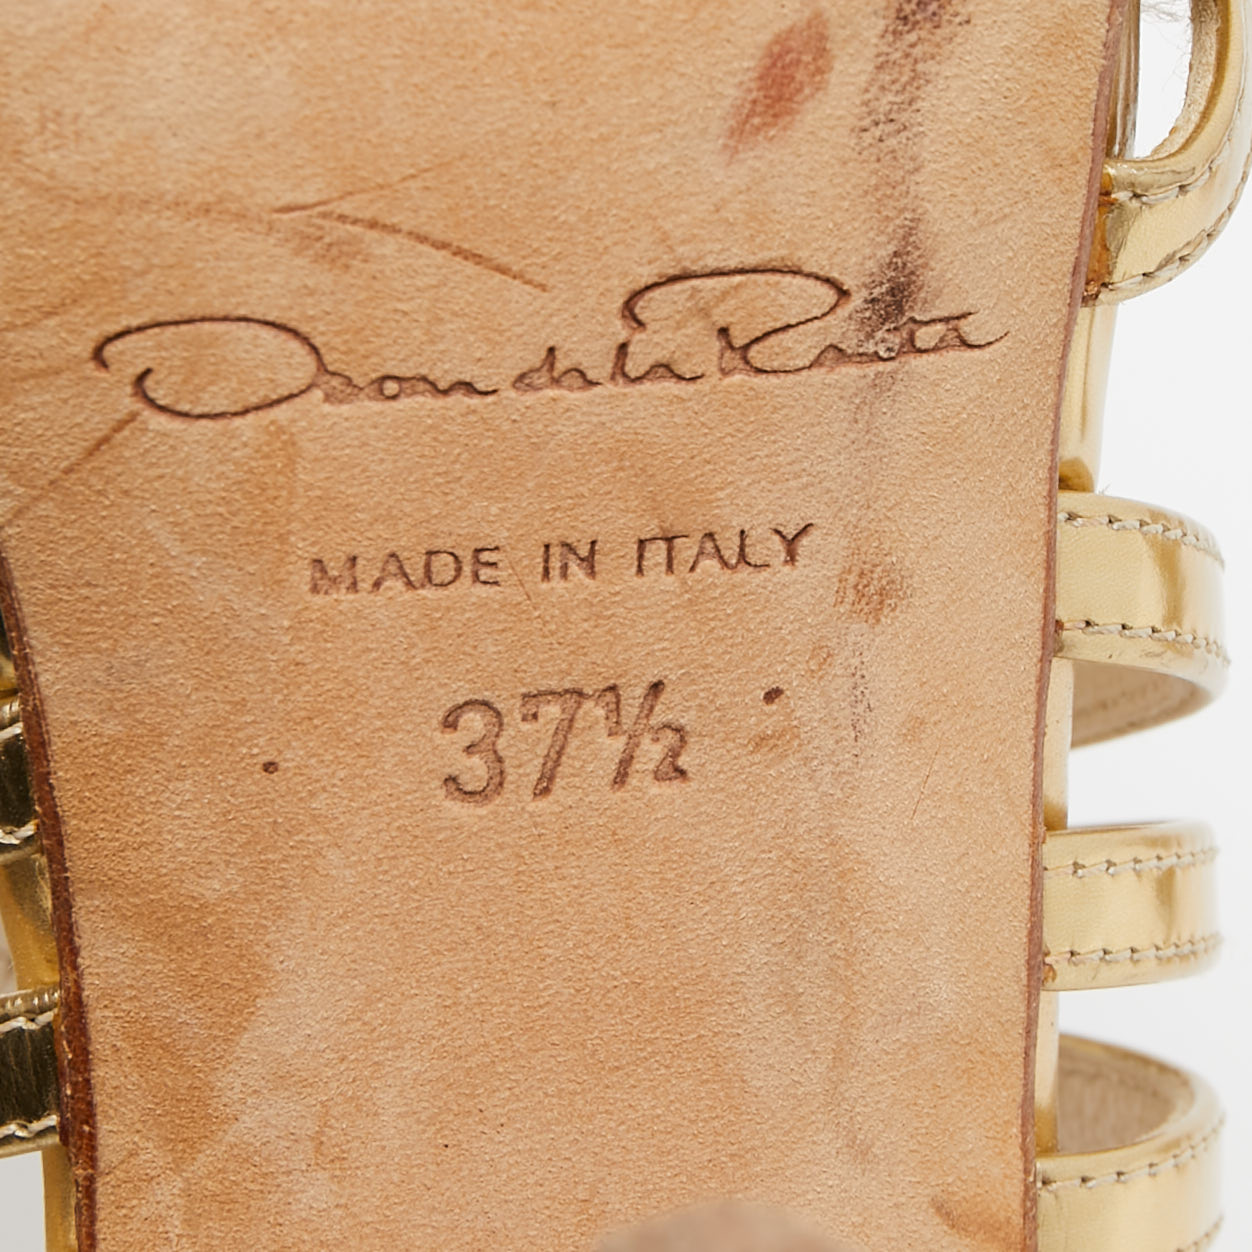 Oscar De La Renta Gold Leather Strappy Sandals Size 37.5